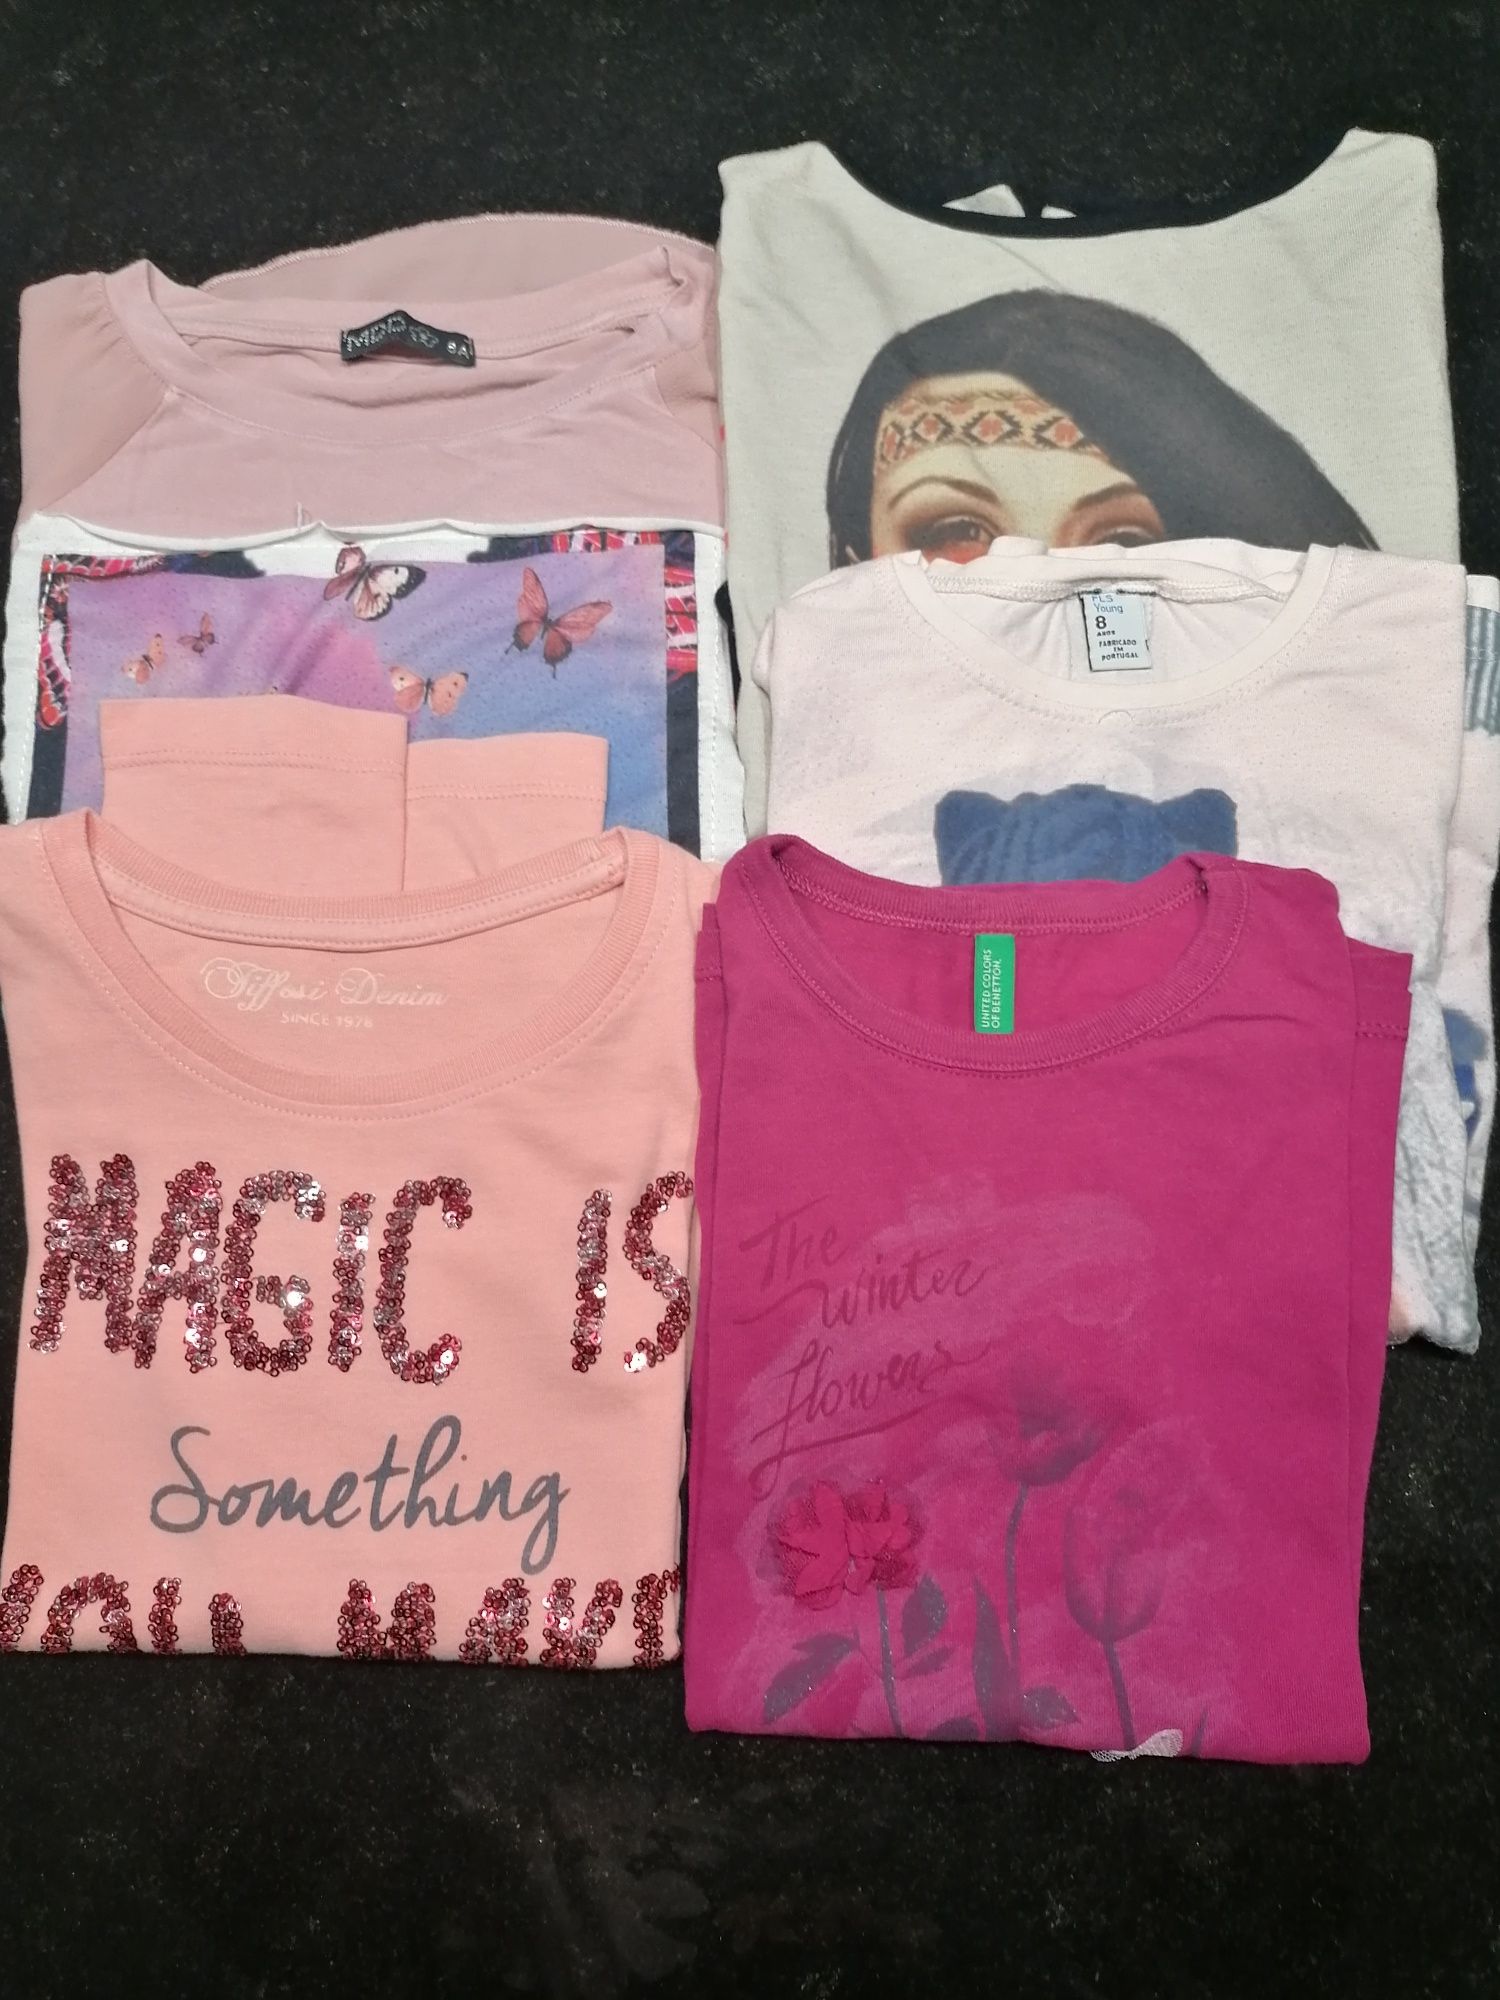 6 fantasticas sweet shirts menina 8 anos.